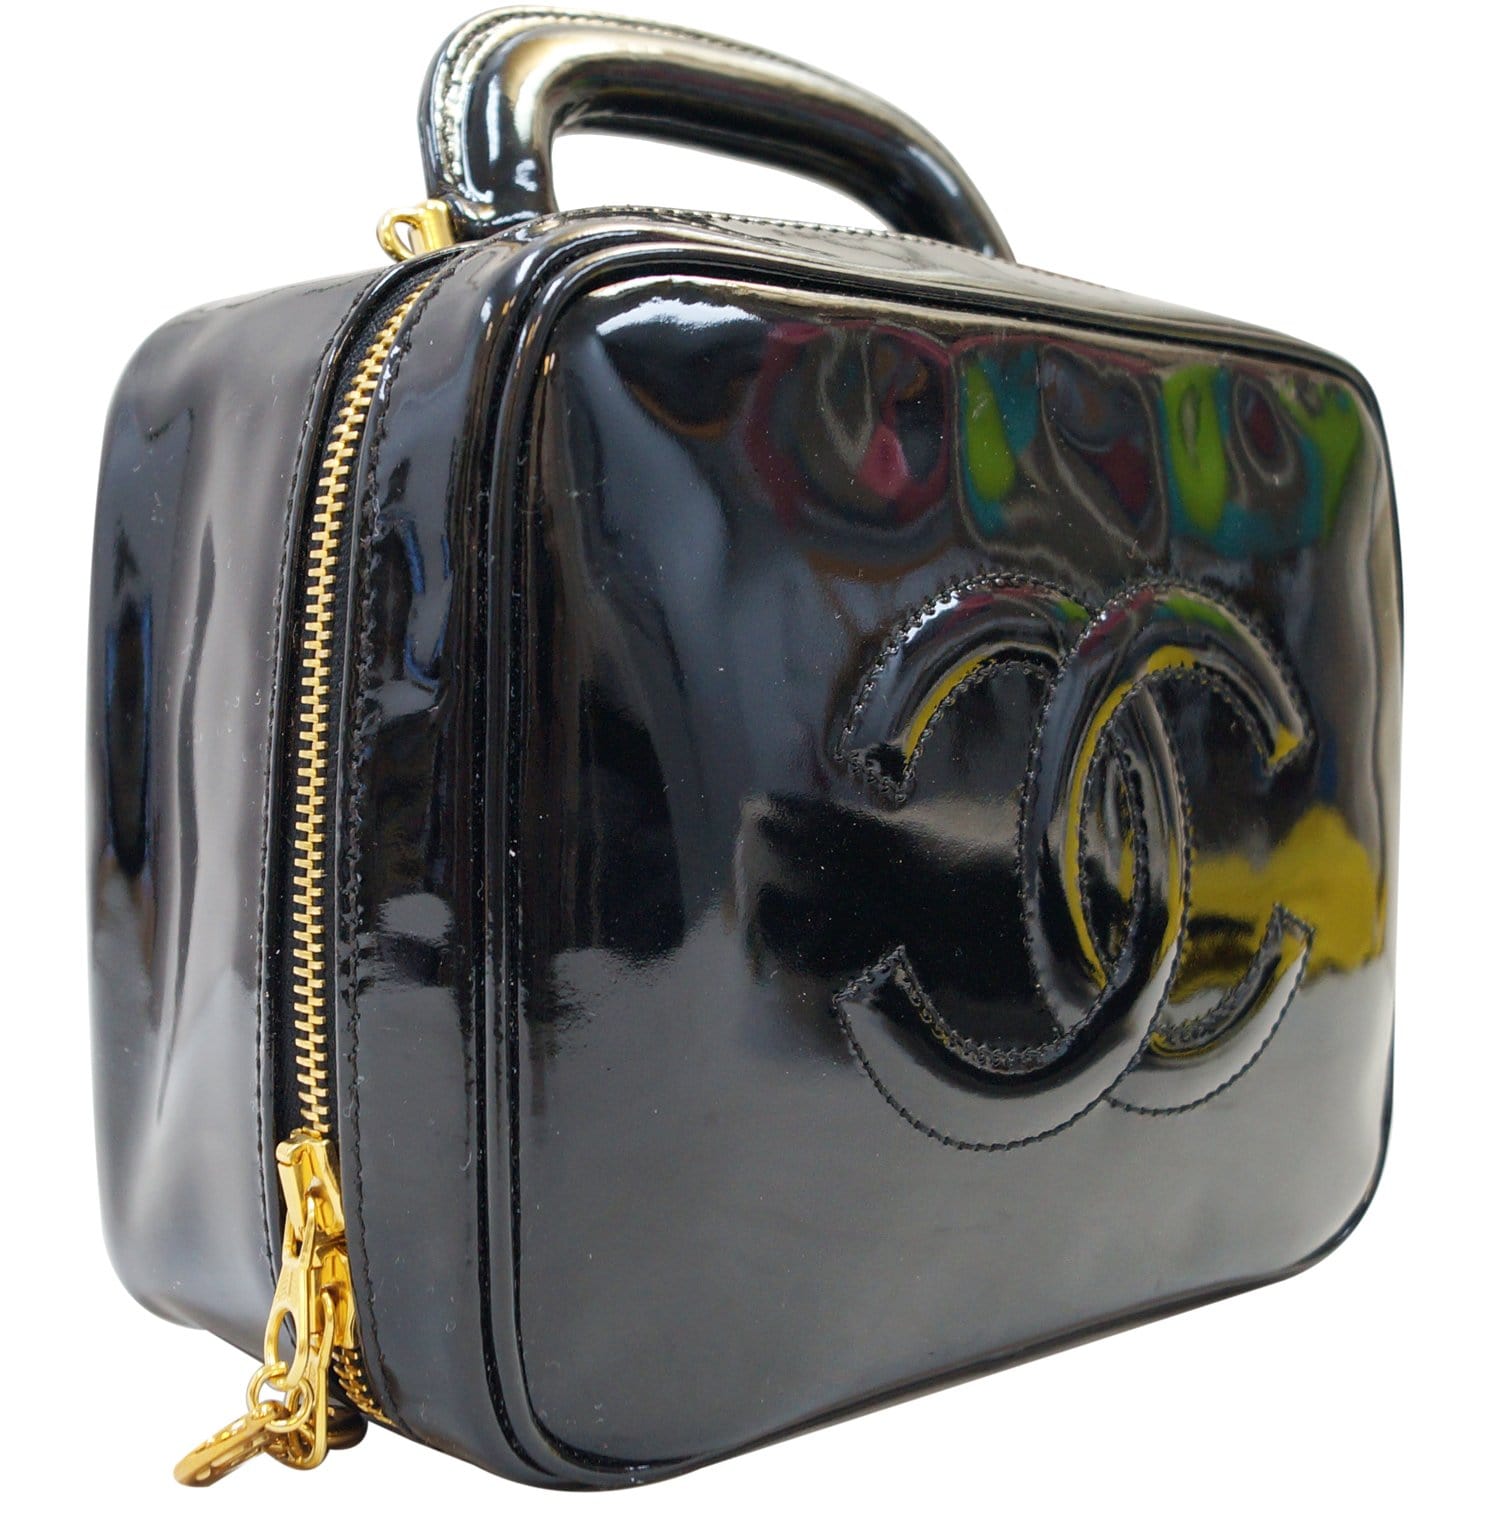 Vintage CHANEL Patent Leather Top Handle Briefcase Bag